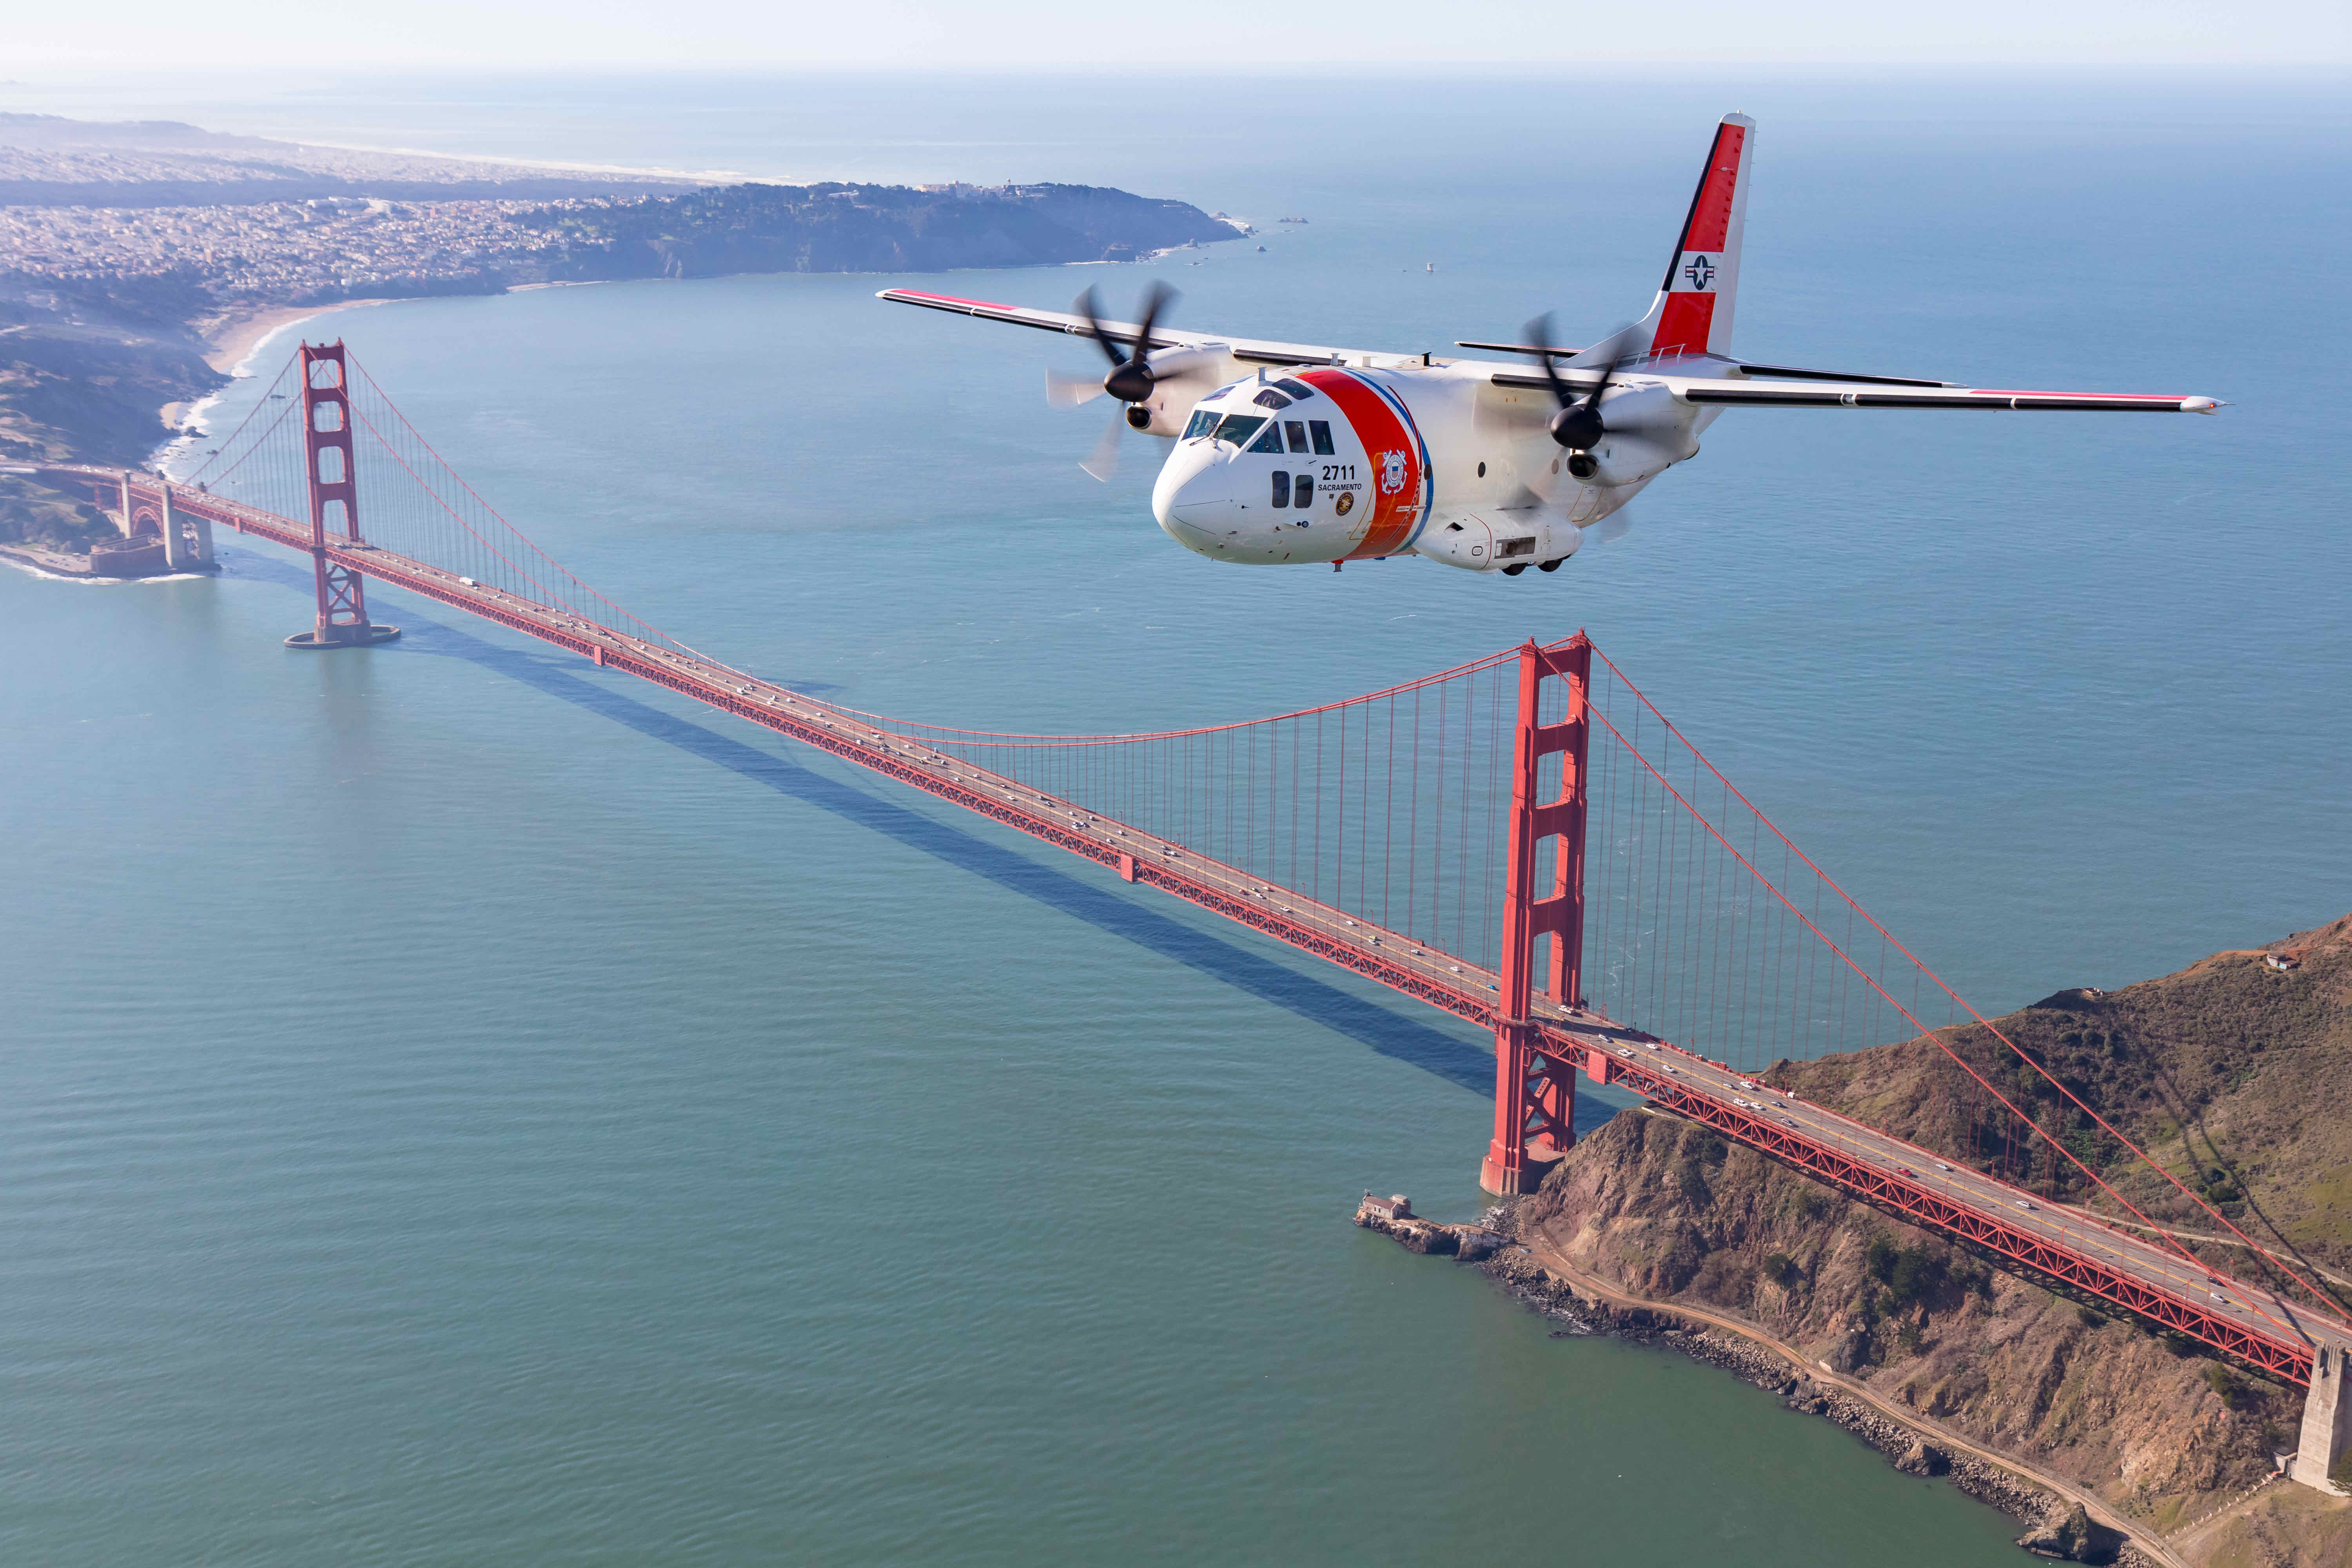 Coast Guard Spartan aircraft in front of Golden Gate Bridge.